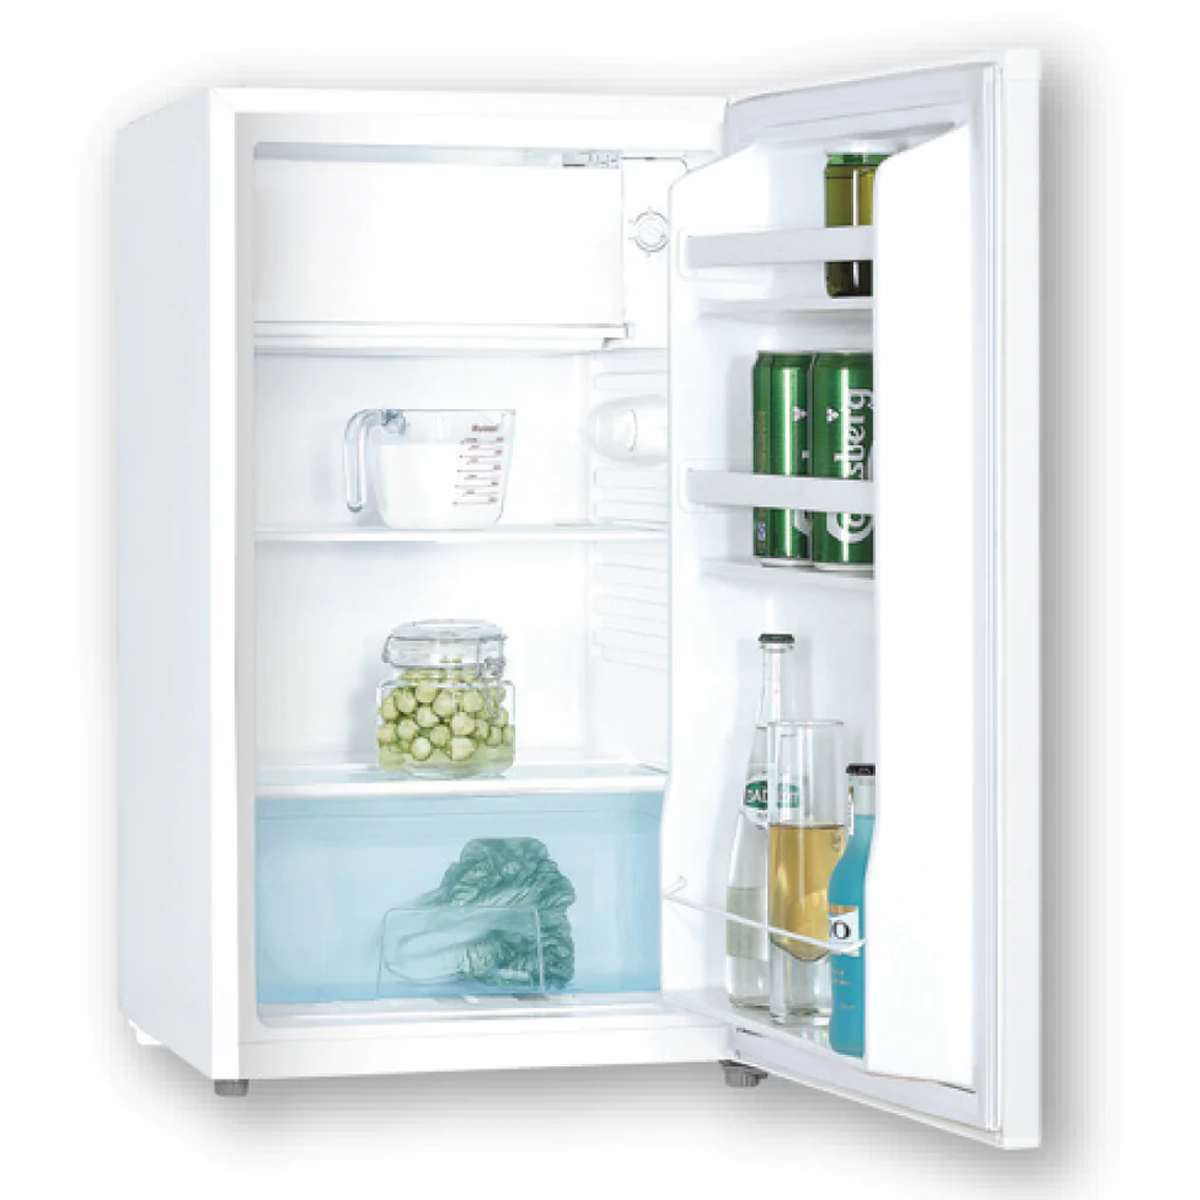 Bompani Single Door Refrigerator, 140 L, White, BR146